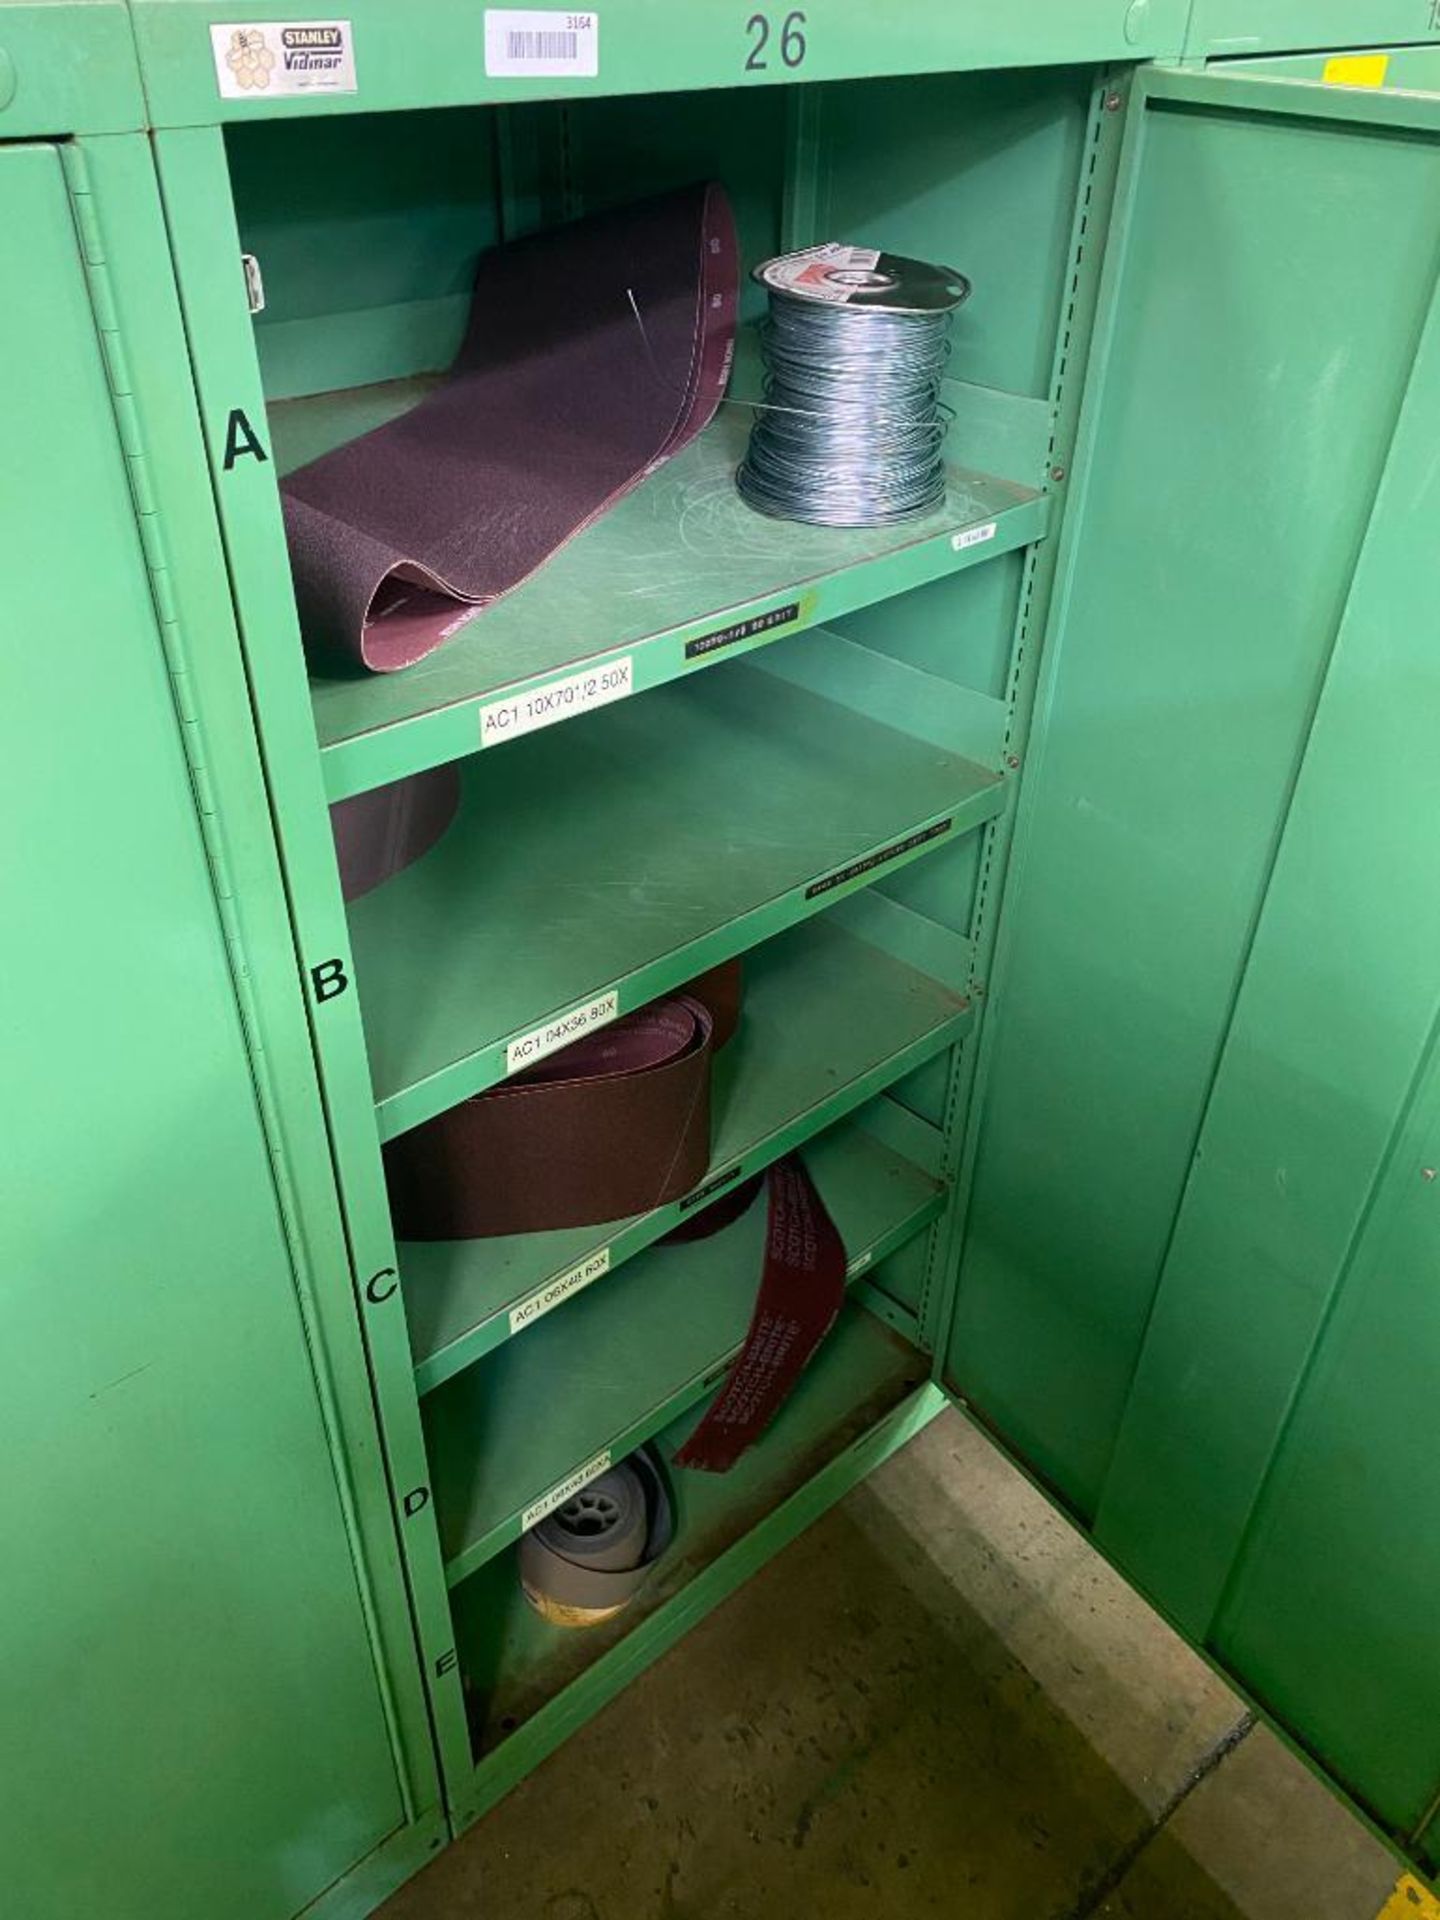 Stanley Vidmar Storage Cabinet w/ Abrasive Belts - Image 2 of 2